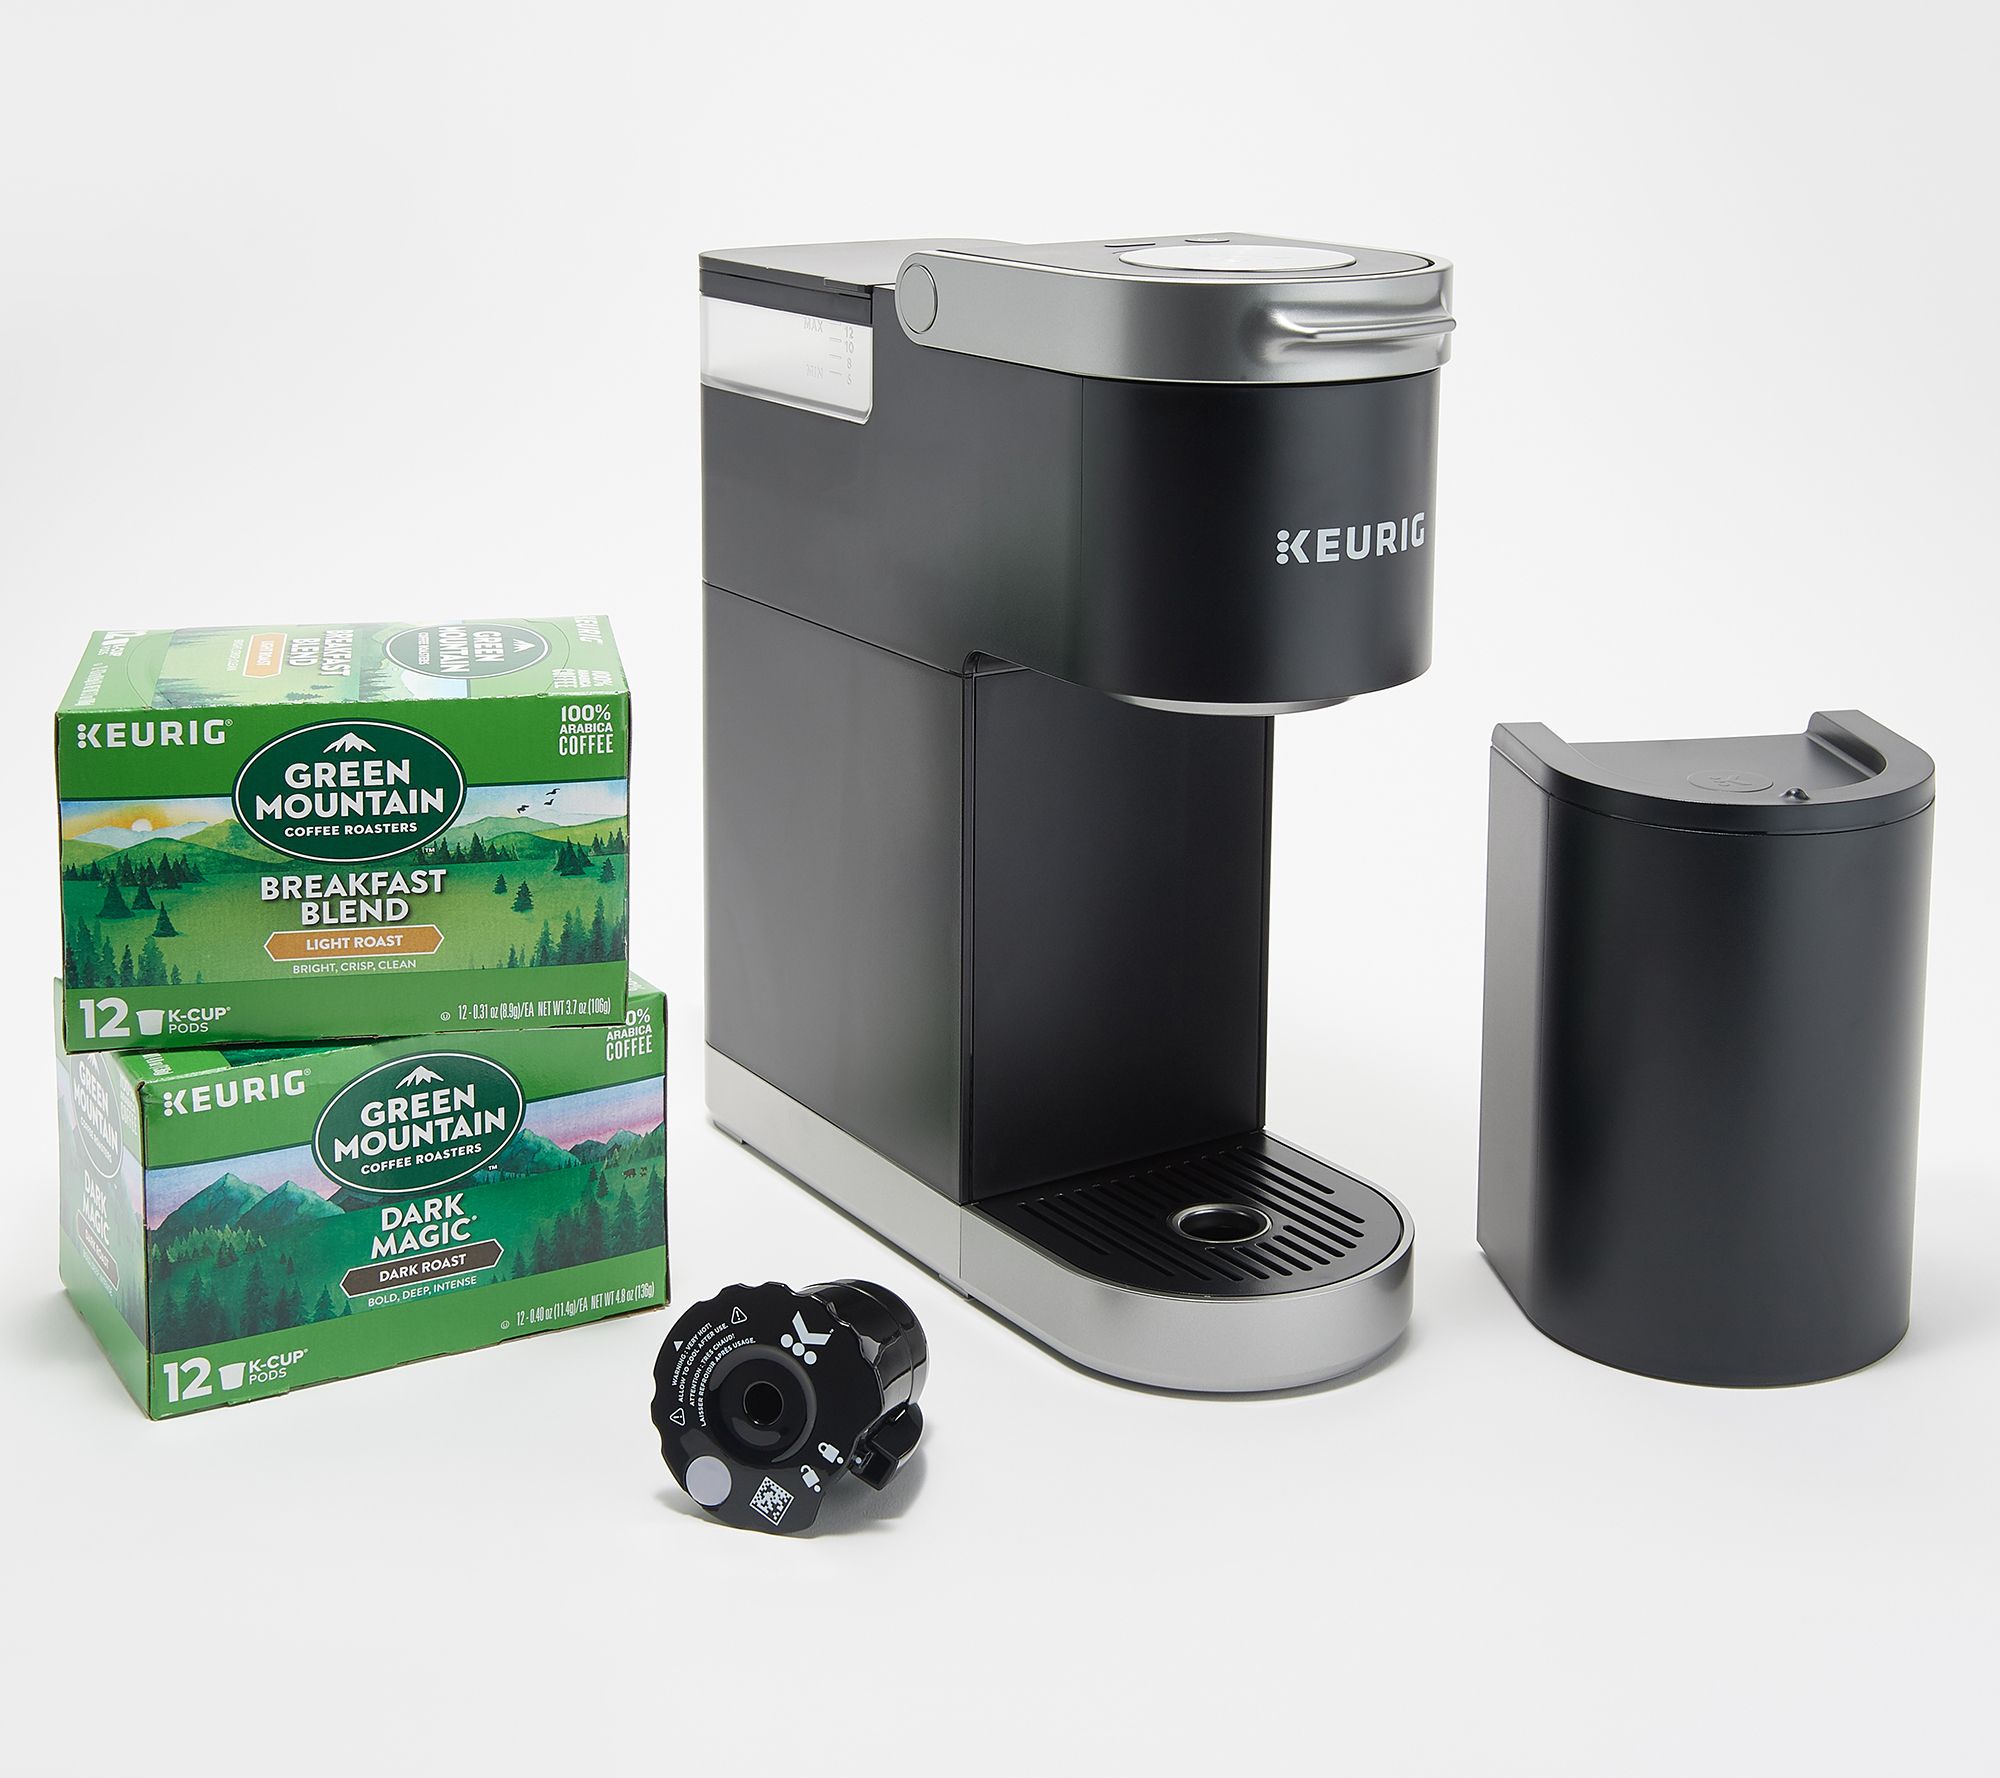 Keurig K-Mini Plus Coffee Maker with Voucher